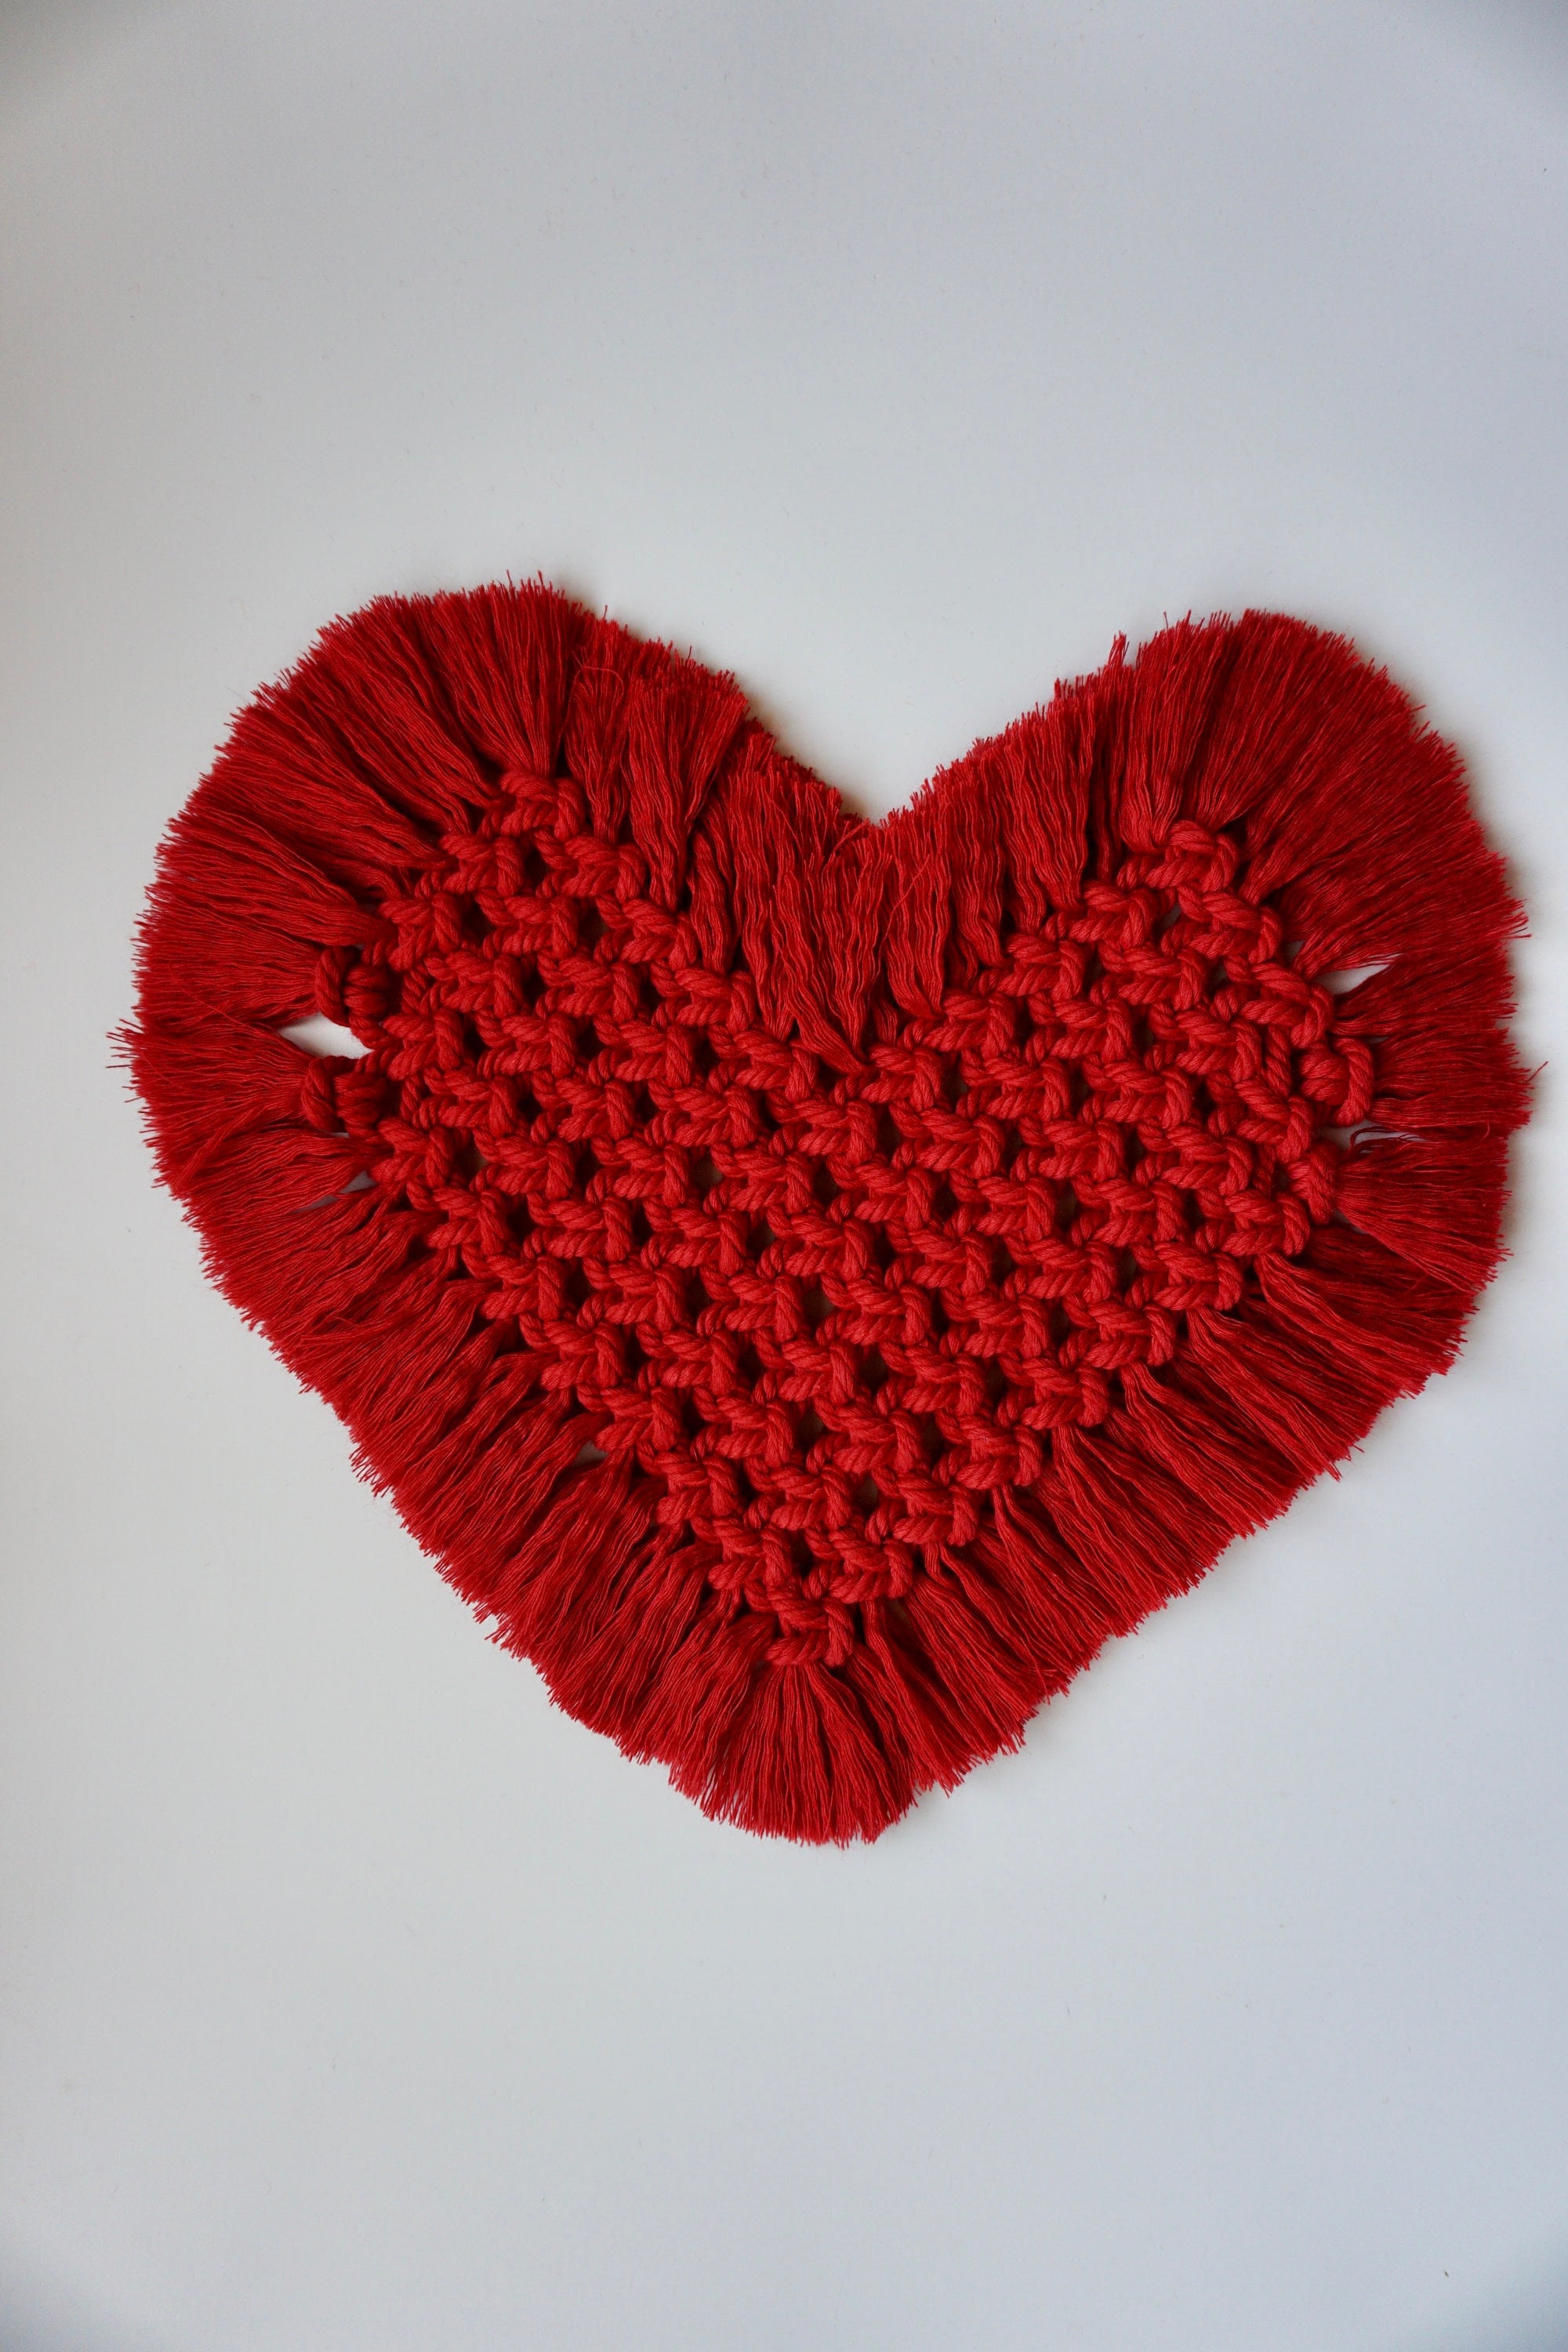 DIY Love Heart Macrame Keychain Kit 